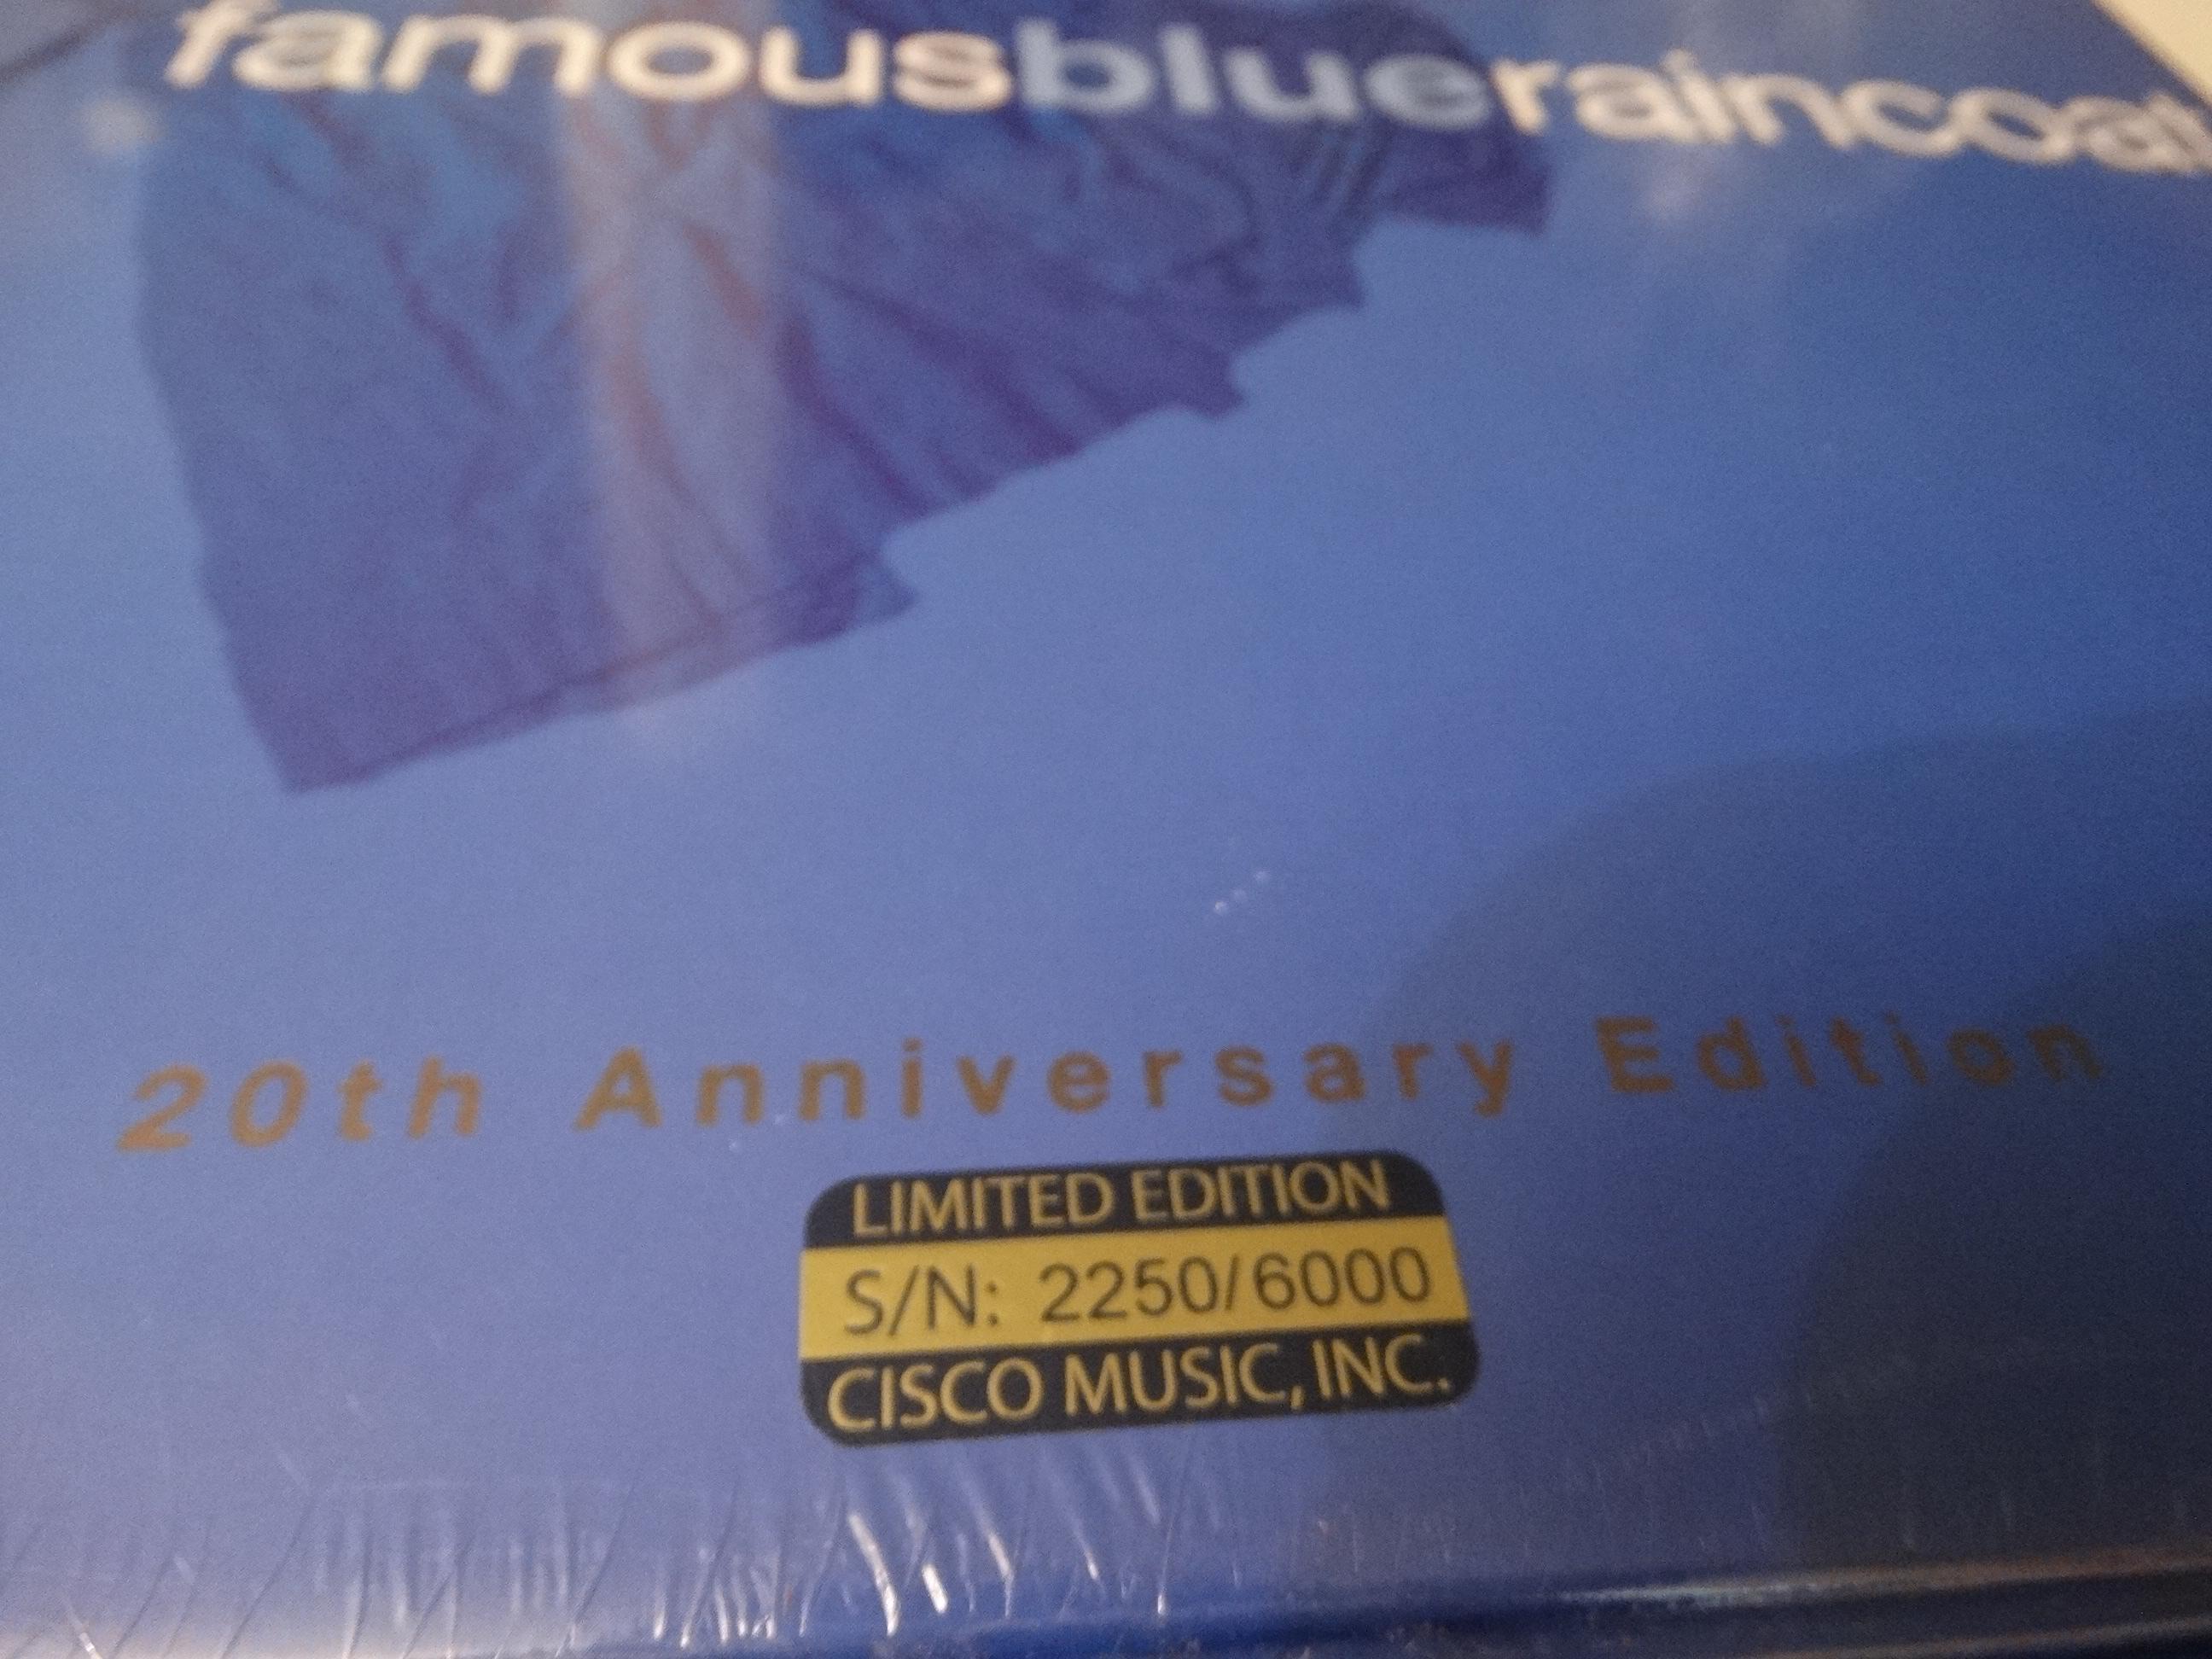 Jennifer Warnes FAMOUS BLUE RAINCOAT 180 Gram LP Box Set Limited Sealed (x3)